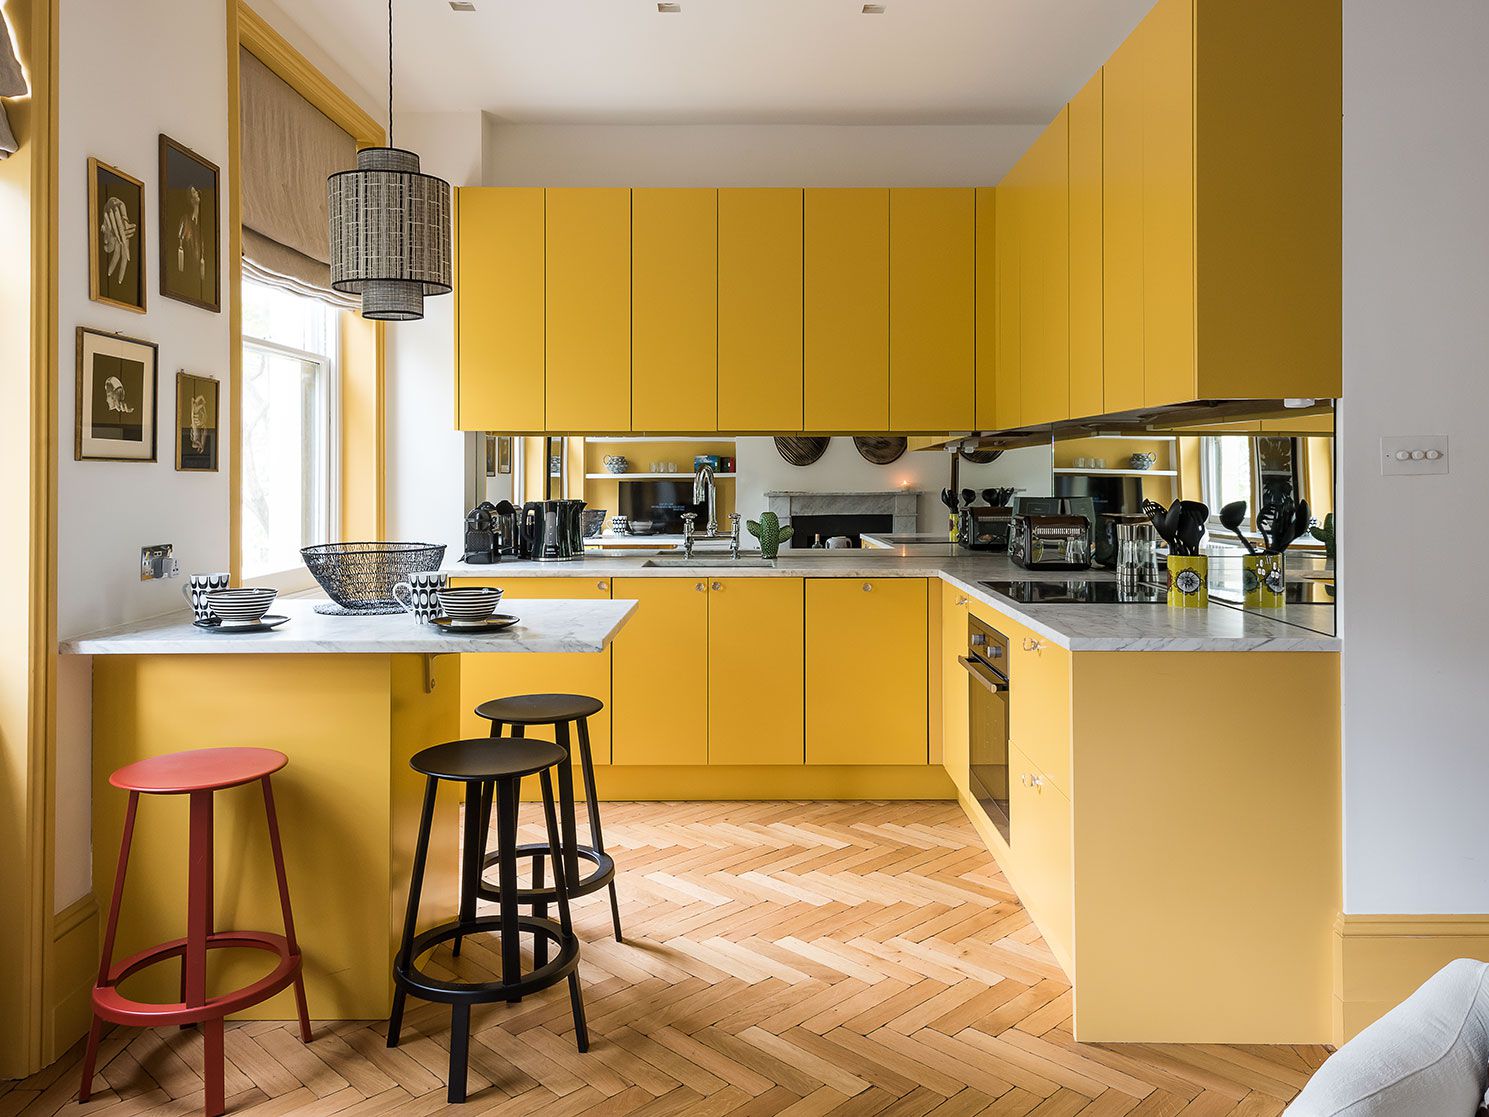 Bright Yellow Cabinets For A Vibrant Kitchen Design